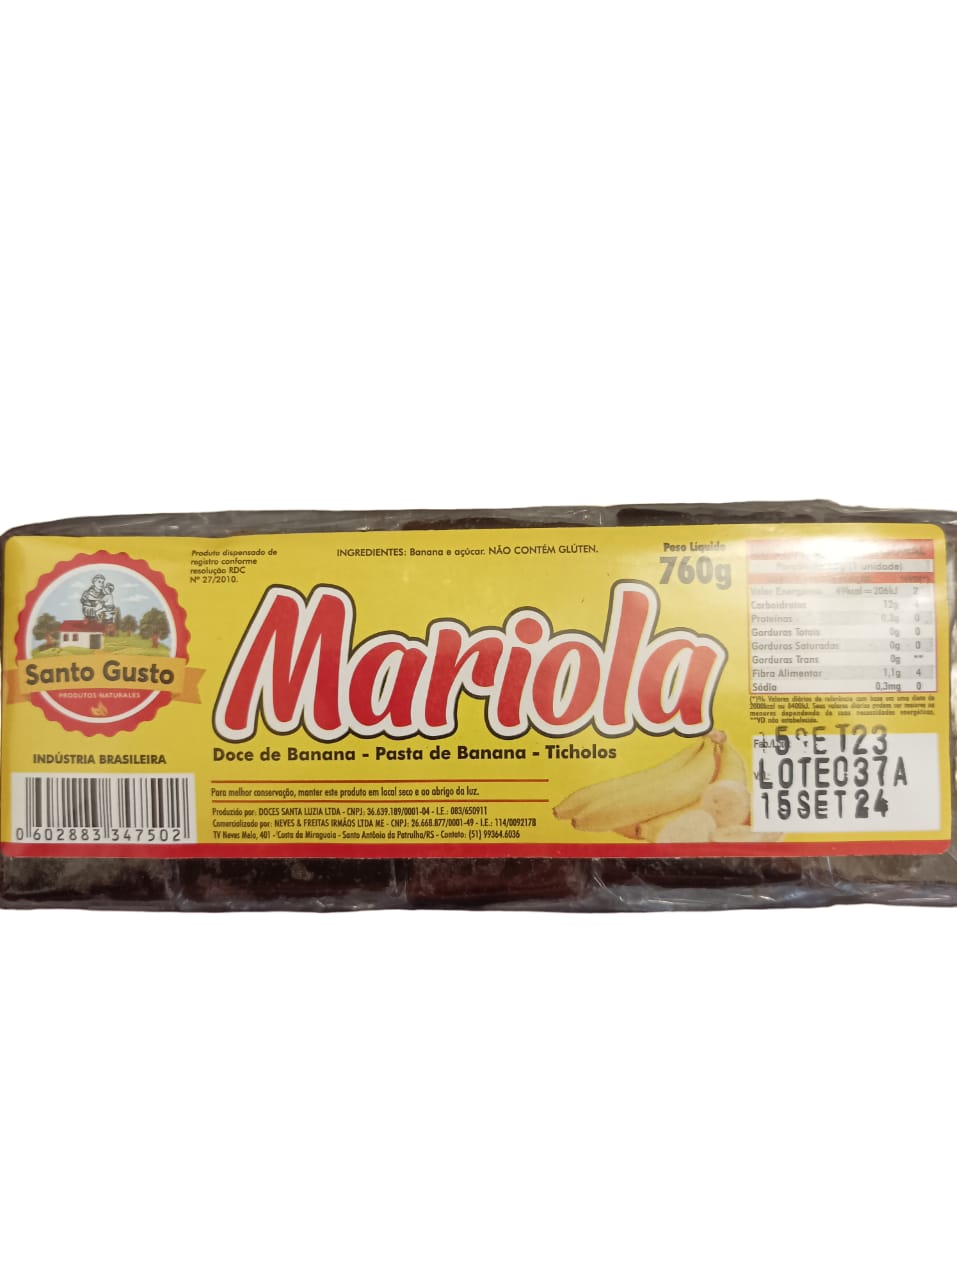 Mariola Ticholos / 750g (Pack of 50)